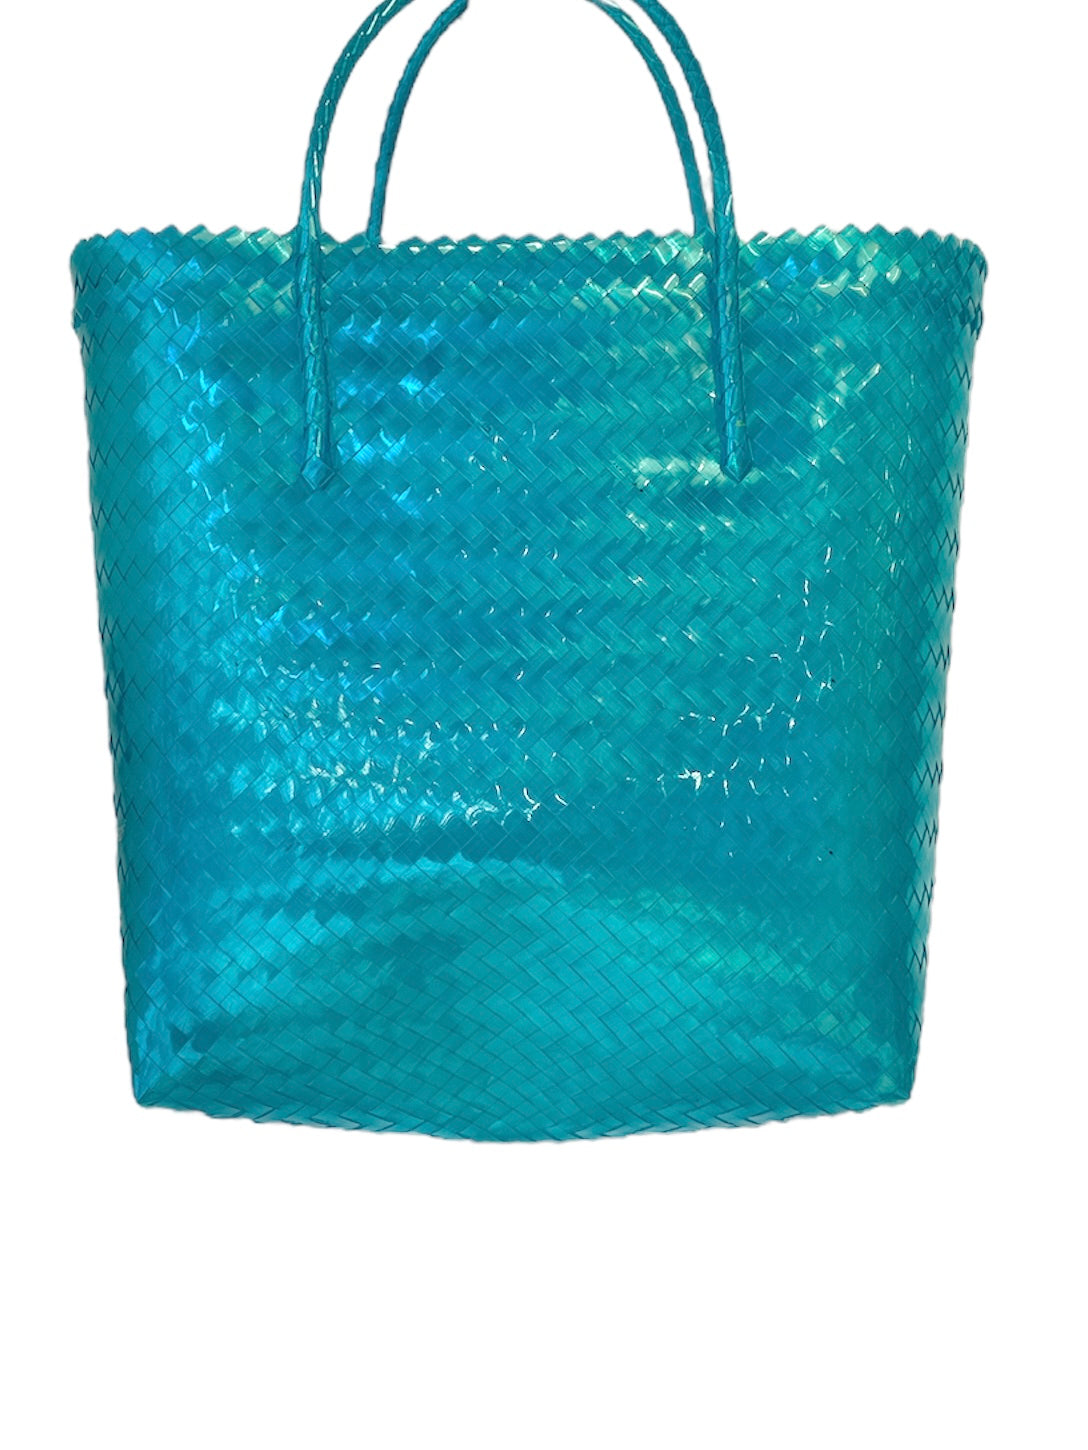 TURQ PLASTIC SHOPPER BAG.